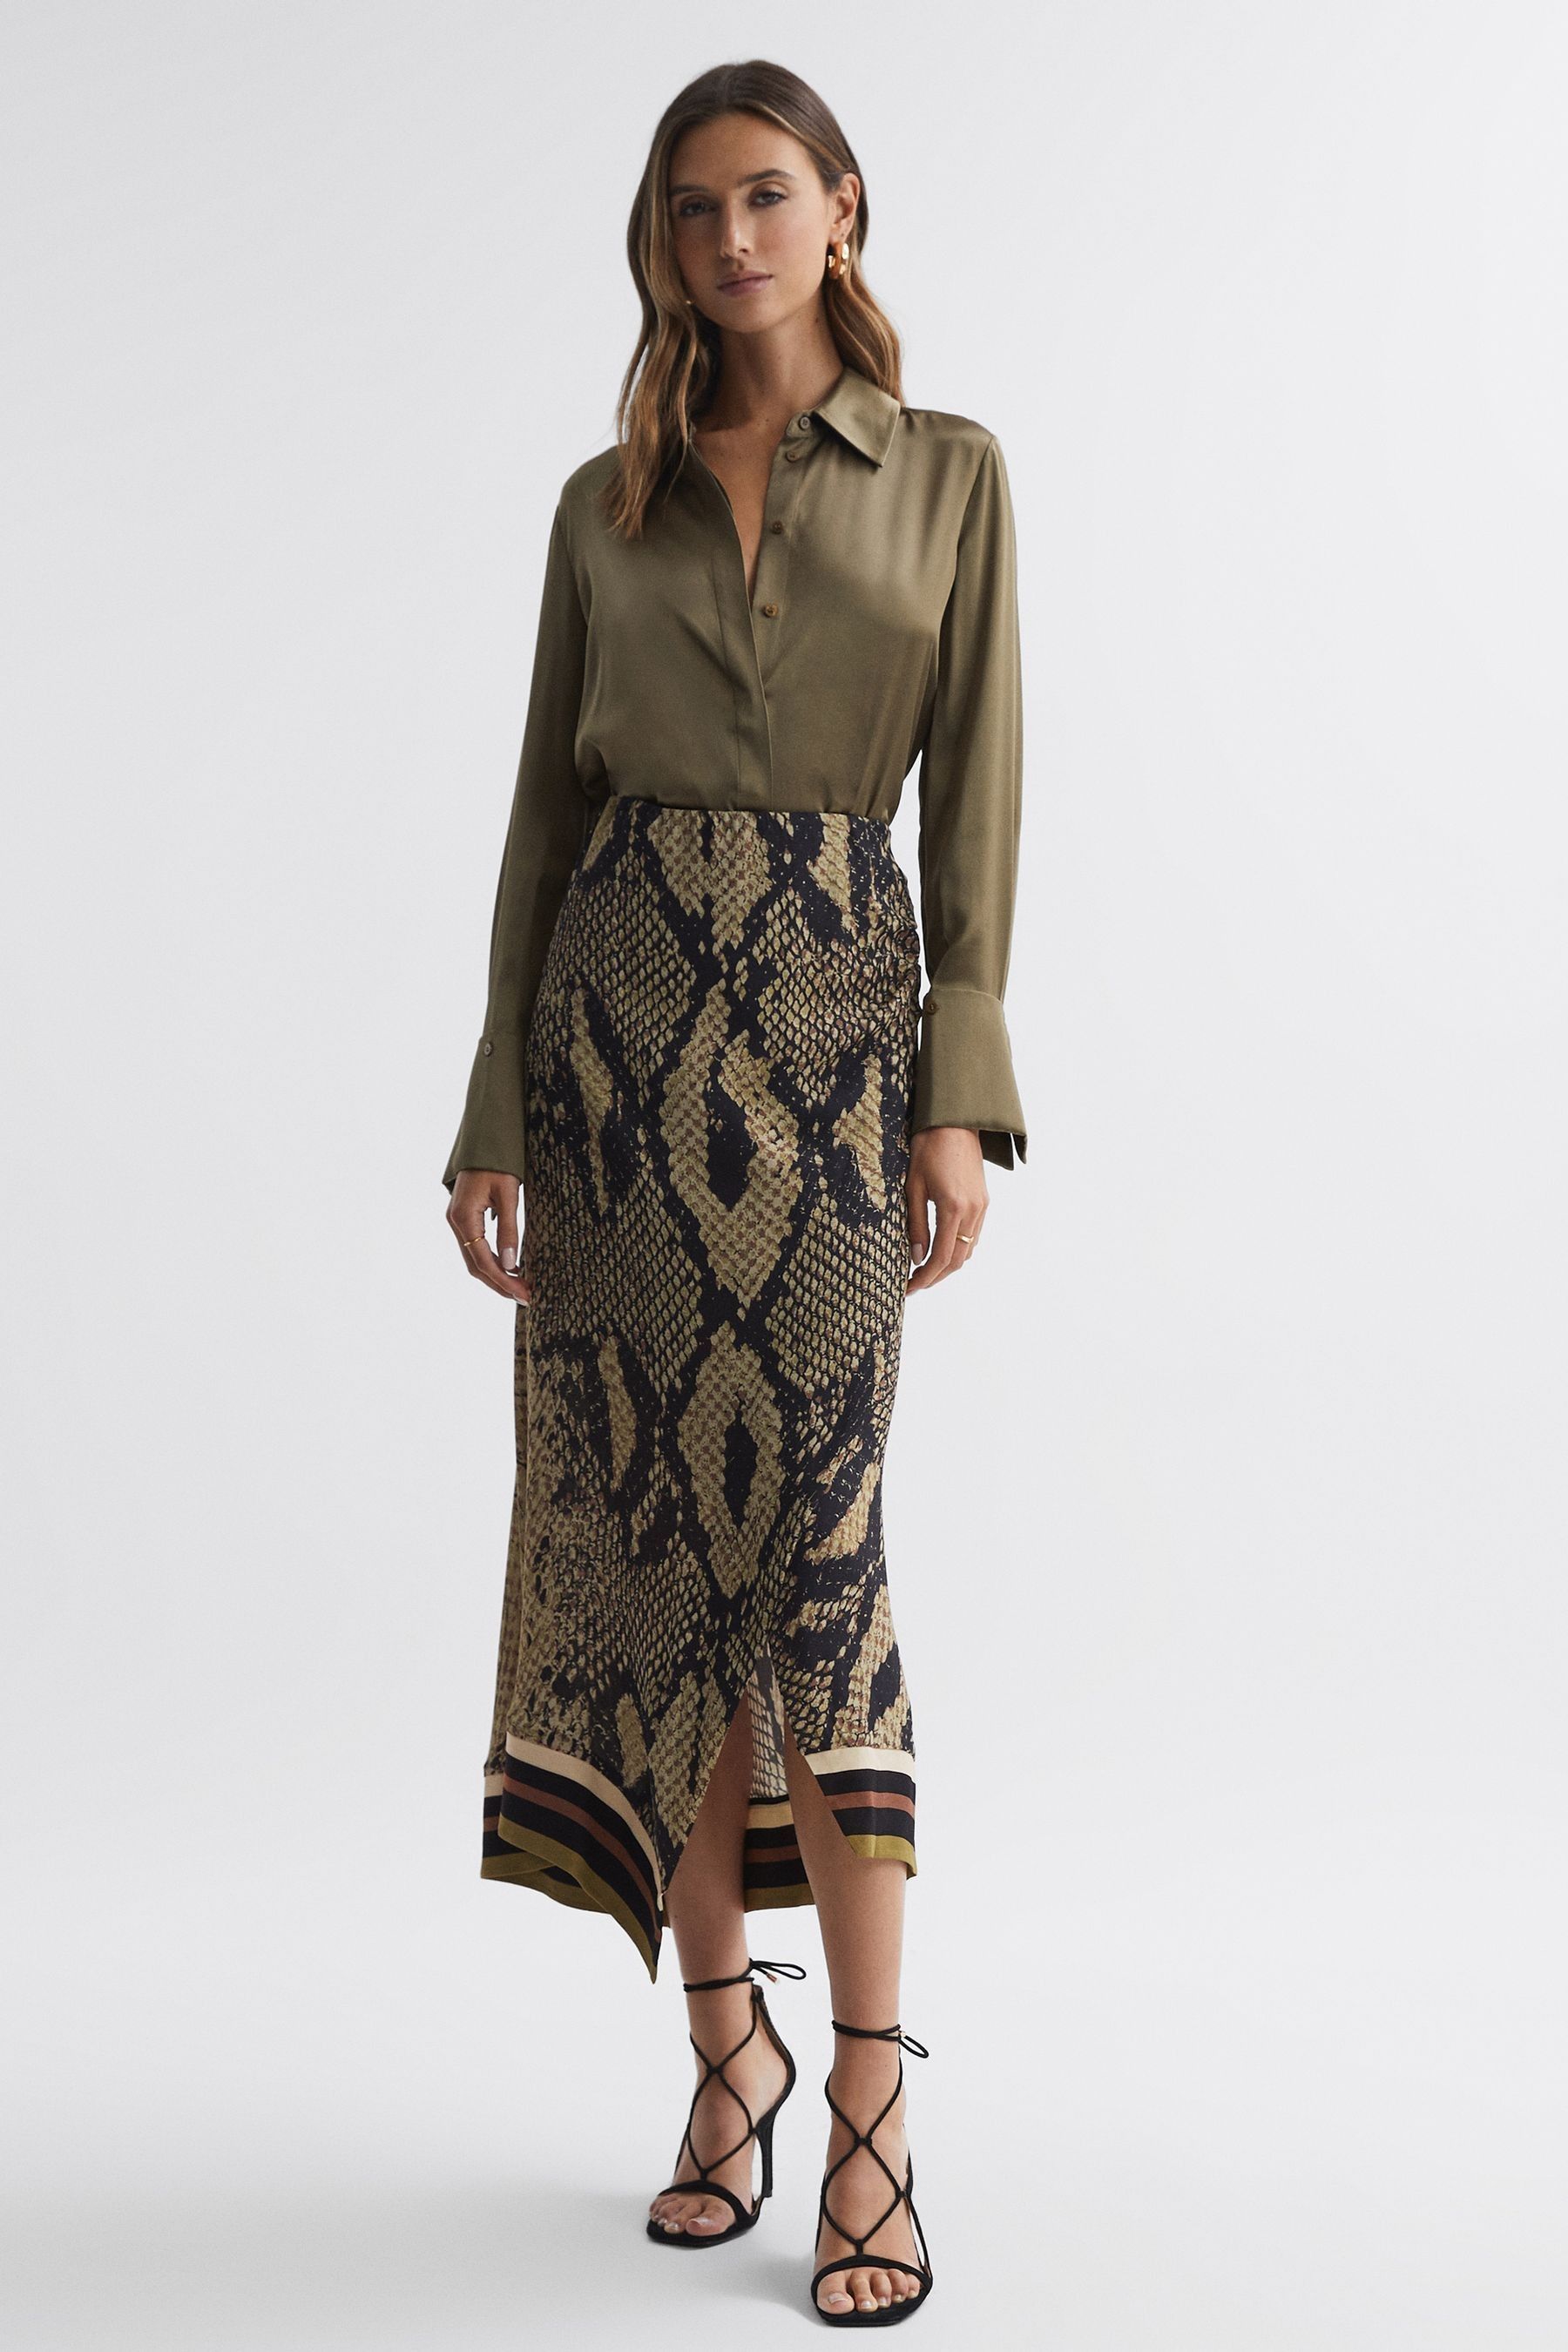 Reiss Daria - Brown Snake Print Midi Skirt, Us 4